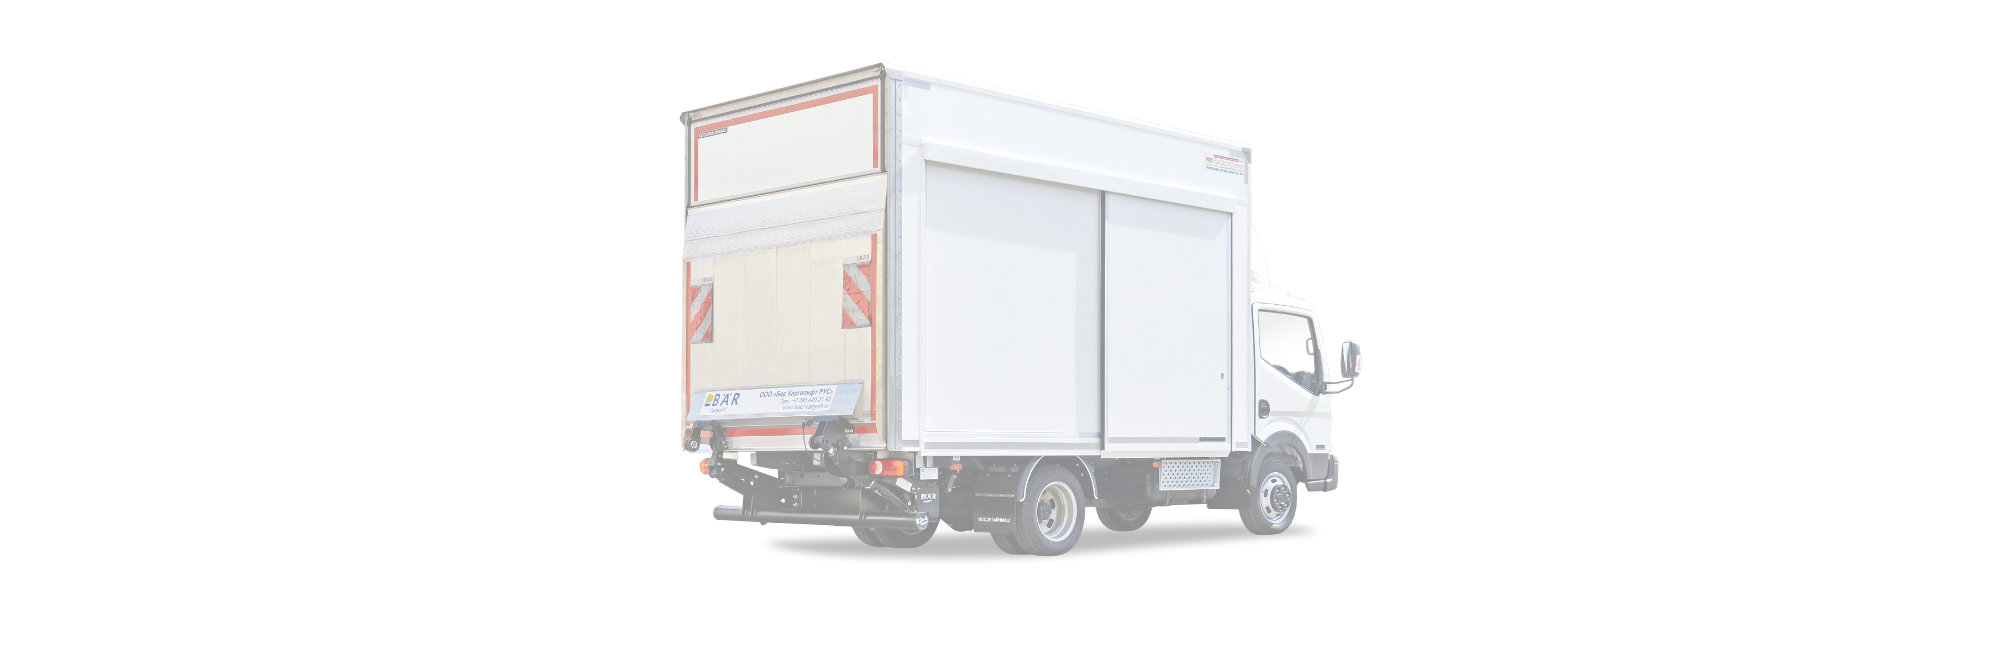 Decopan Commercial Vehicle FRP GRP laminates gallery non-food truck, trailer, van body